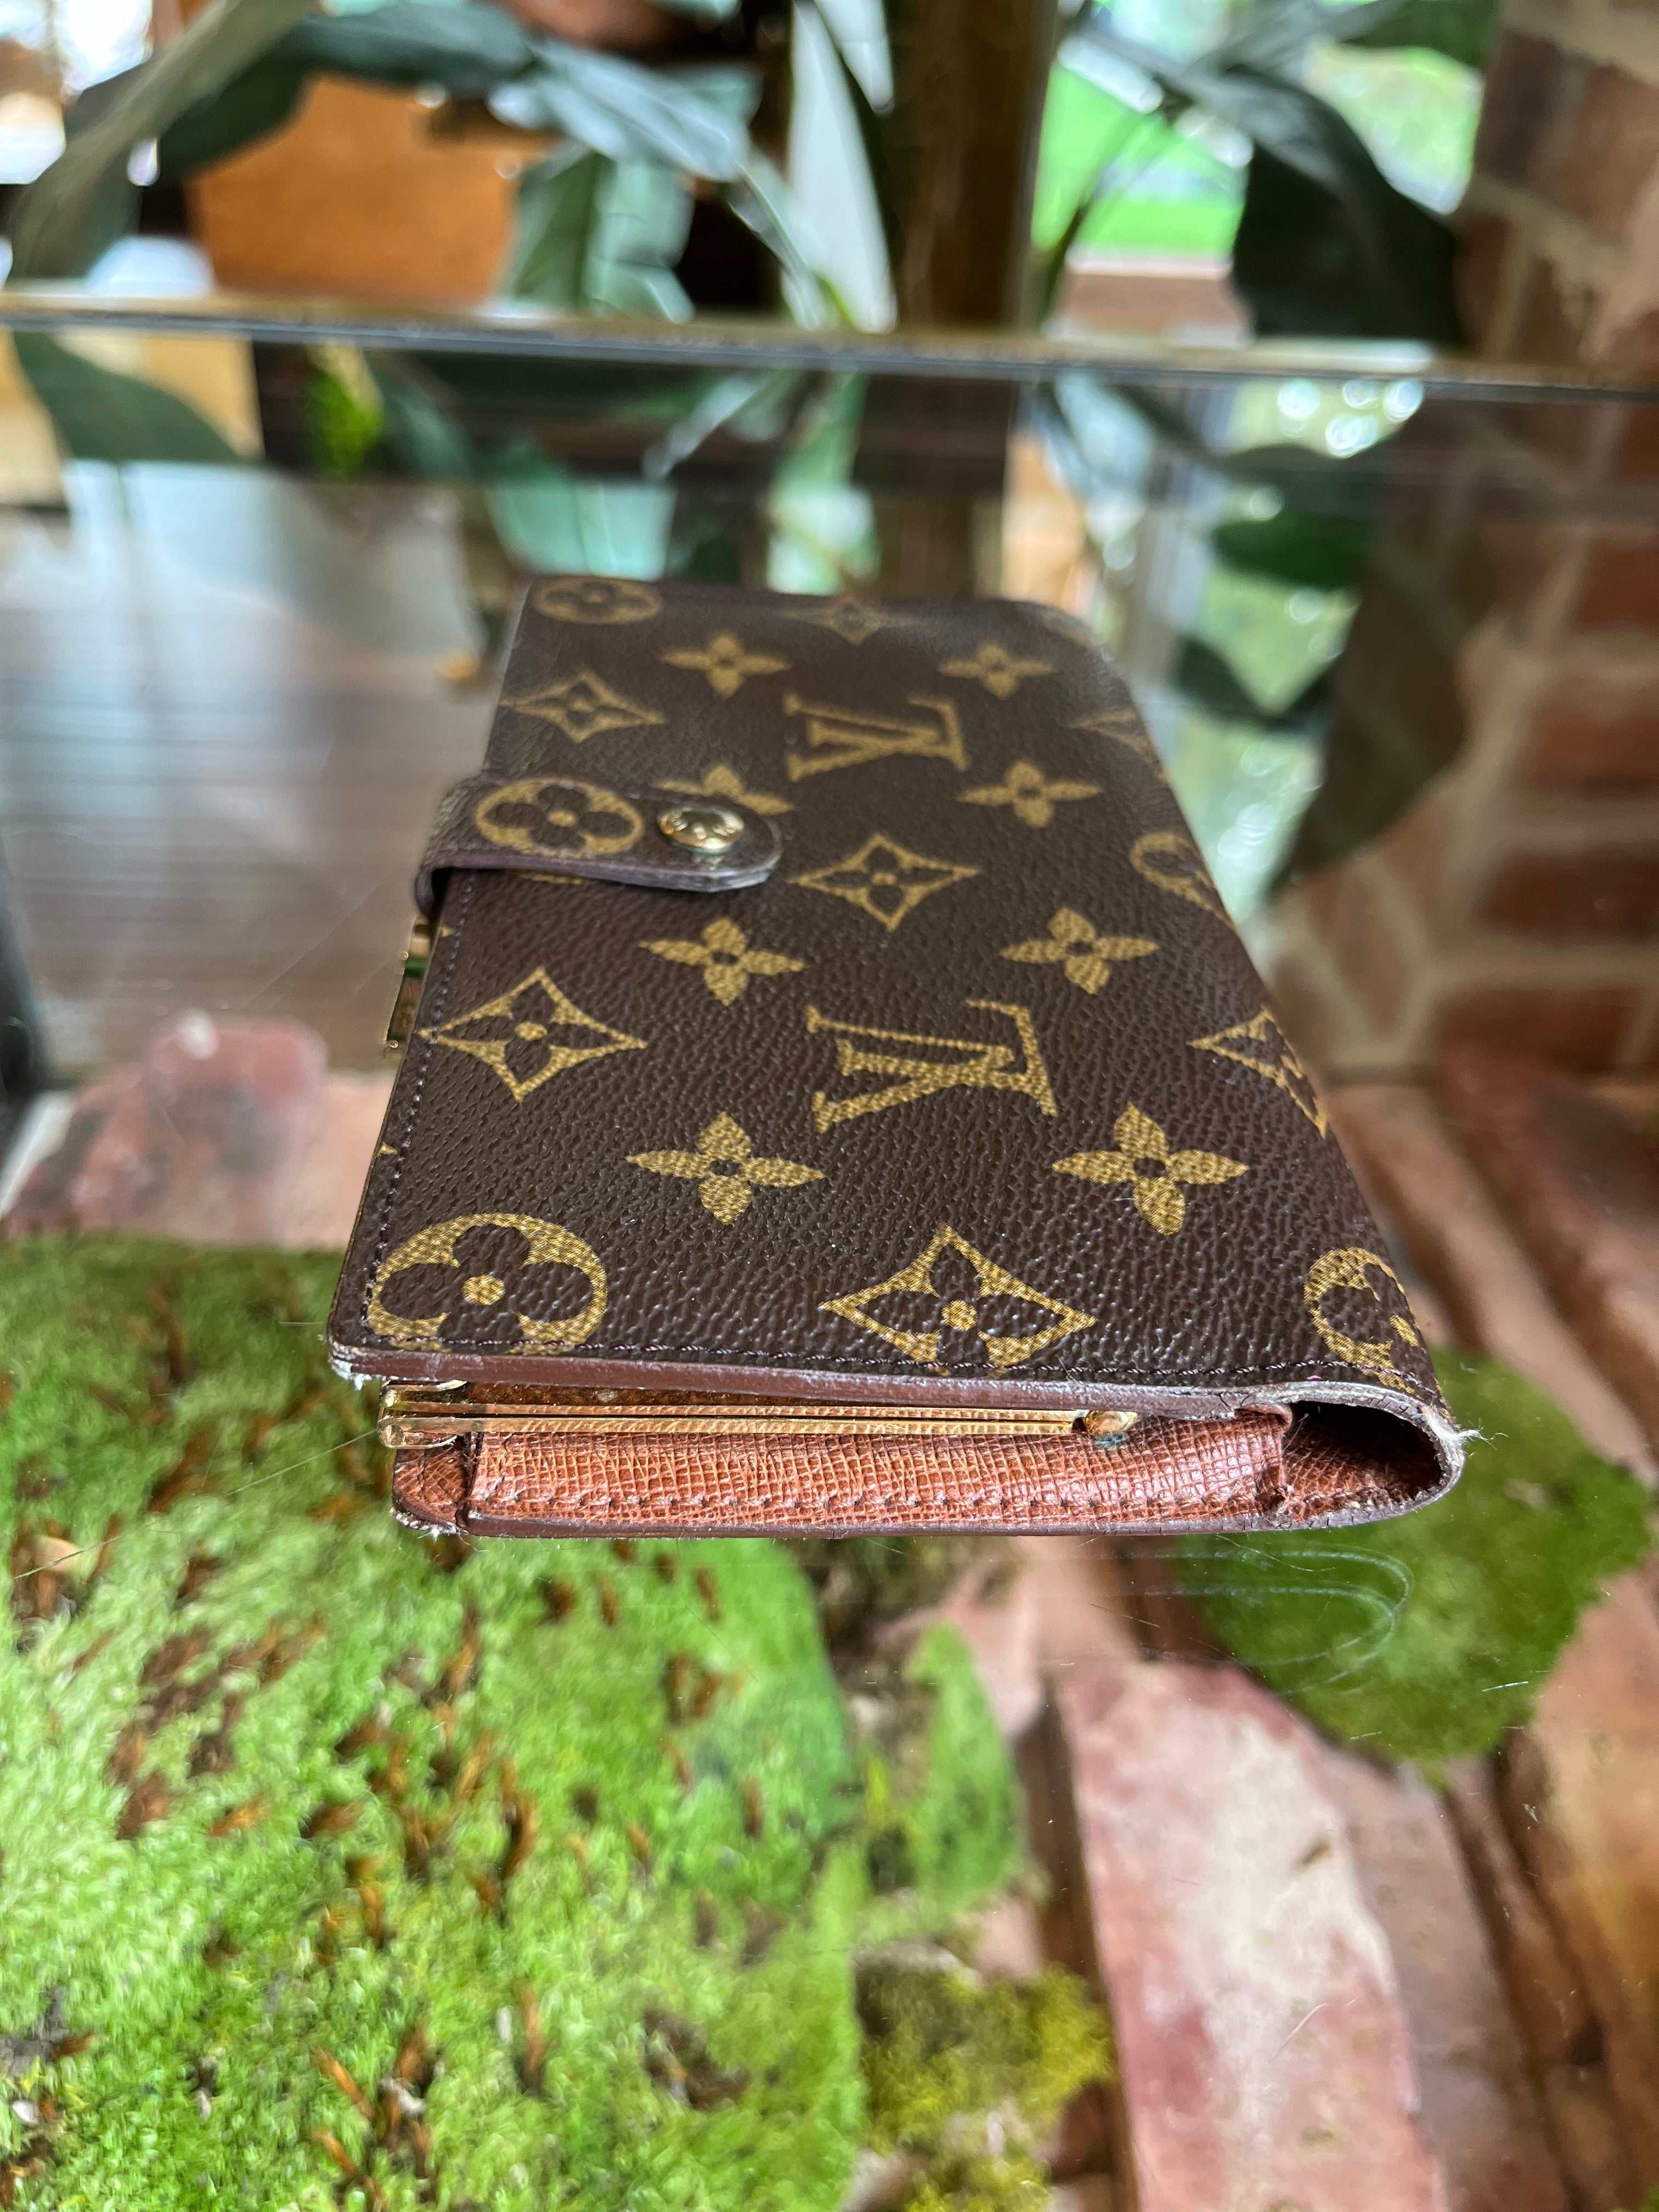 LOUIS VUITTON French purse wallet  Comfortable wallet, Louis vuitton,  Monogram